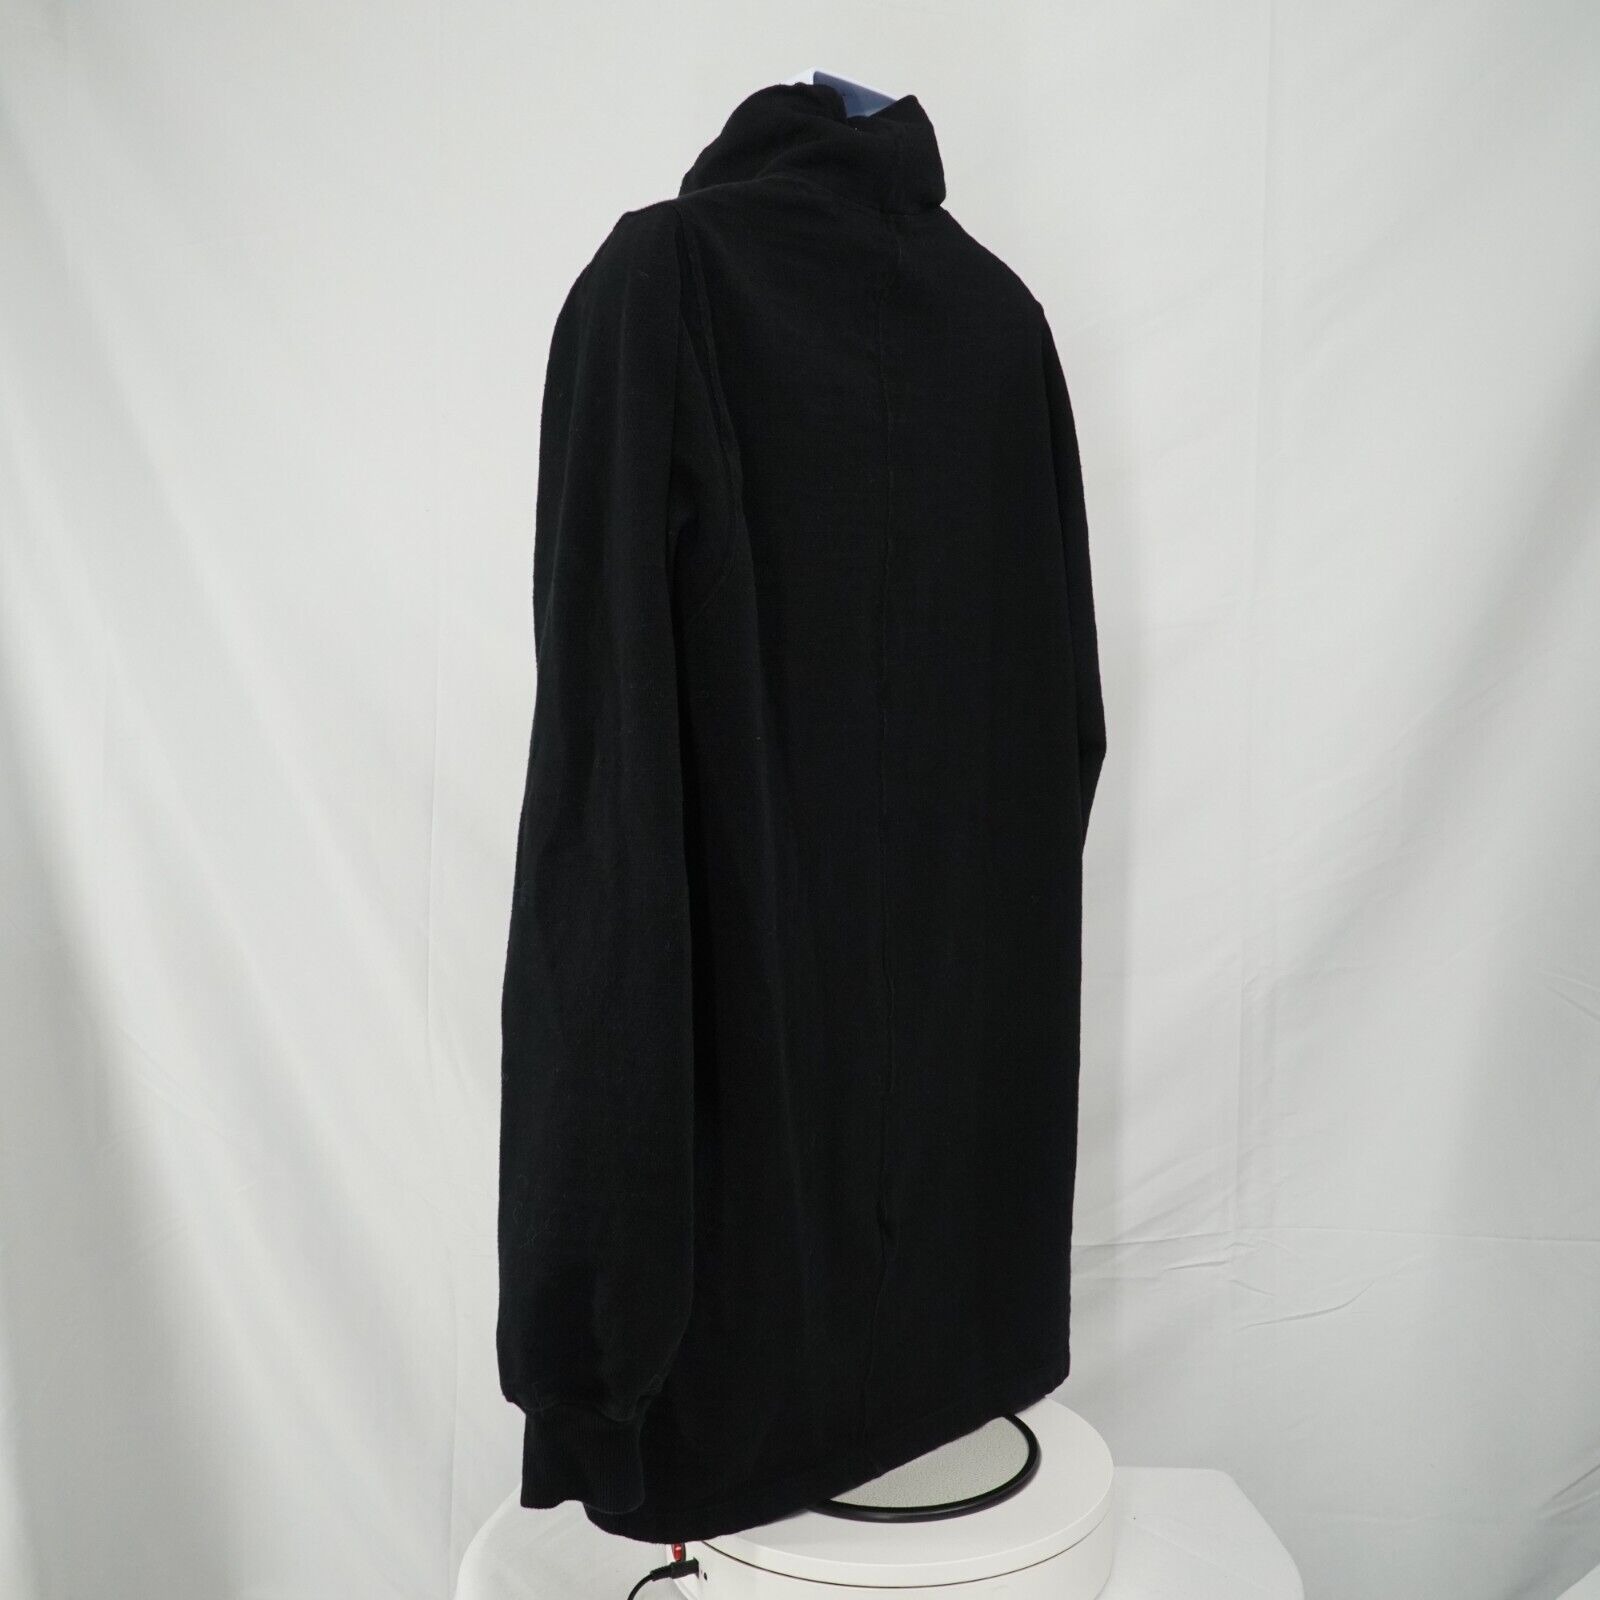 Rick Black Turtleneck Sweater Size Medium FW17 Glitter - 11